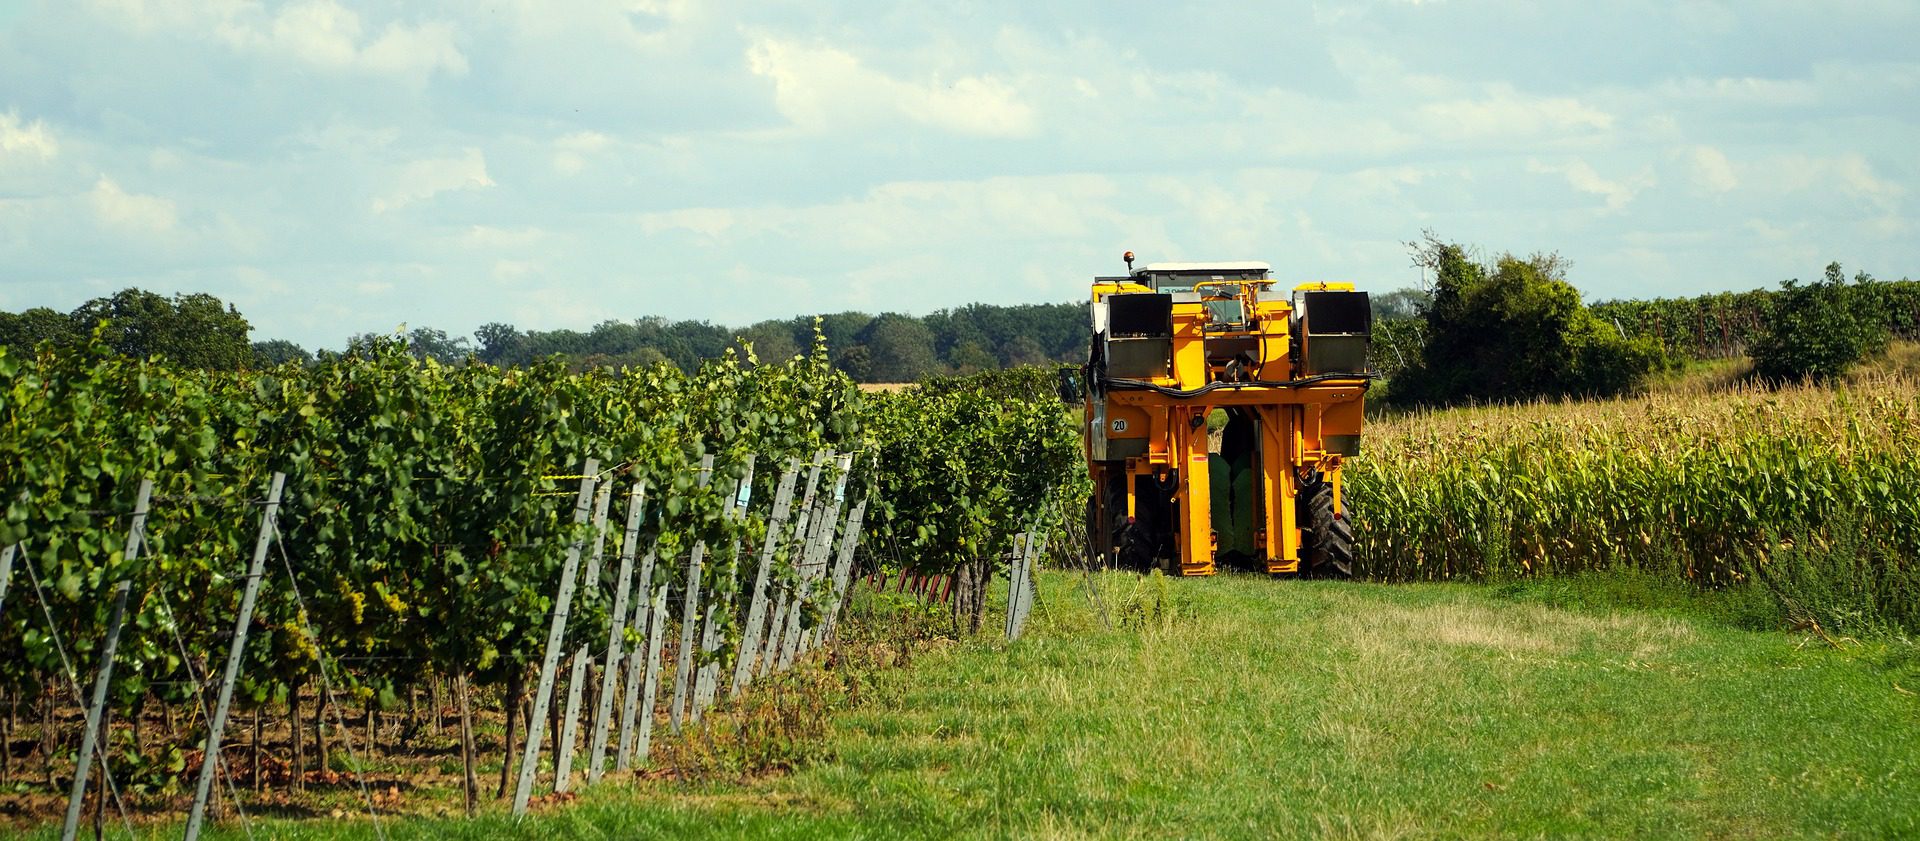 Harvesting truck in the vineyard